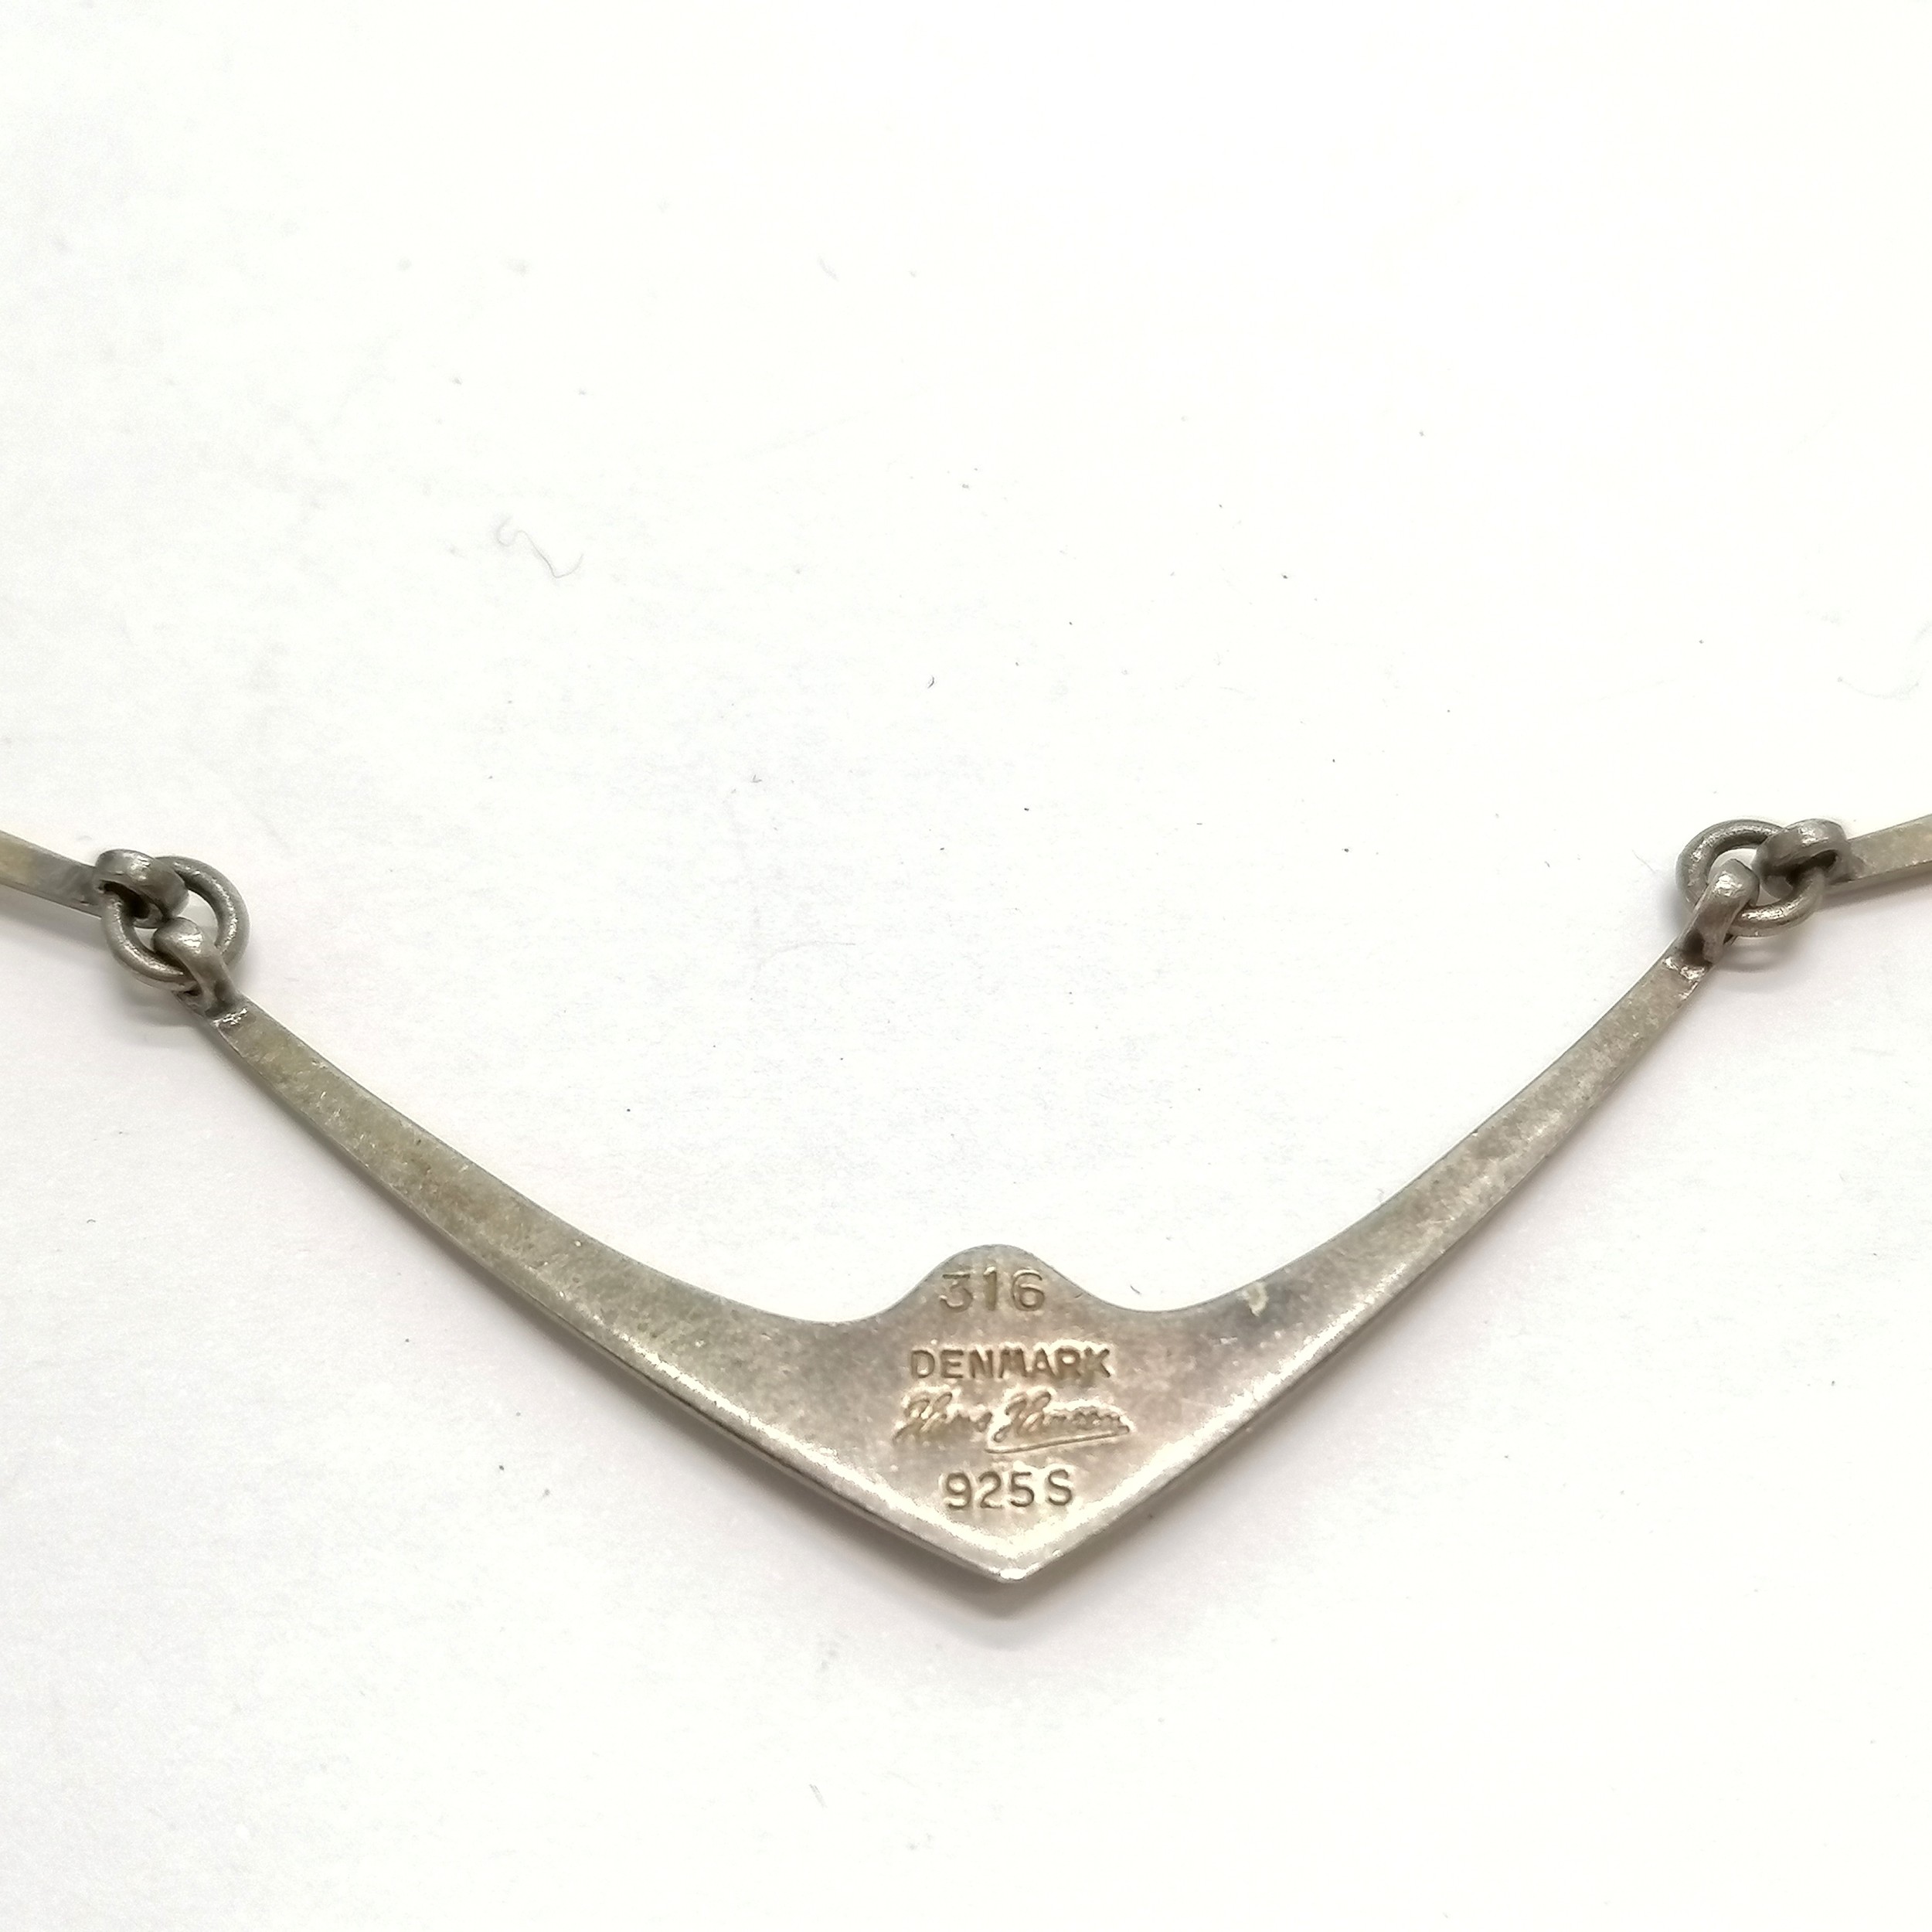 Hans Hansen #316 Danish silver necklace - 26g - Image 3 of 3